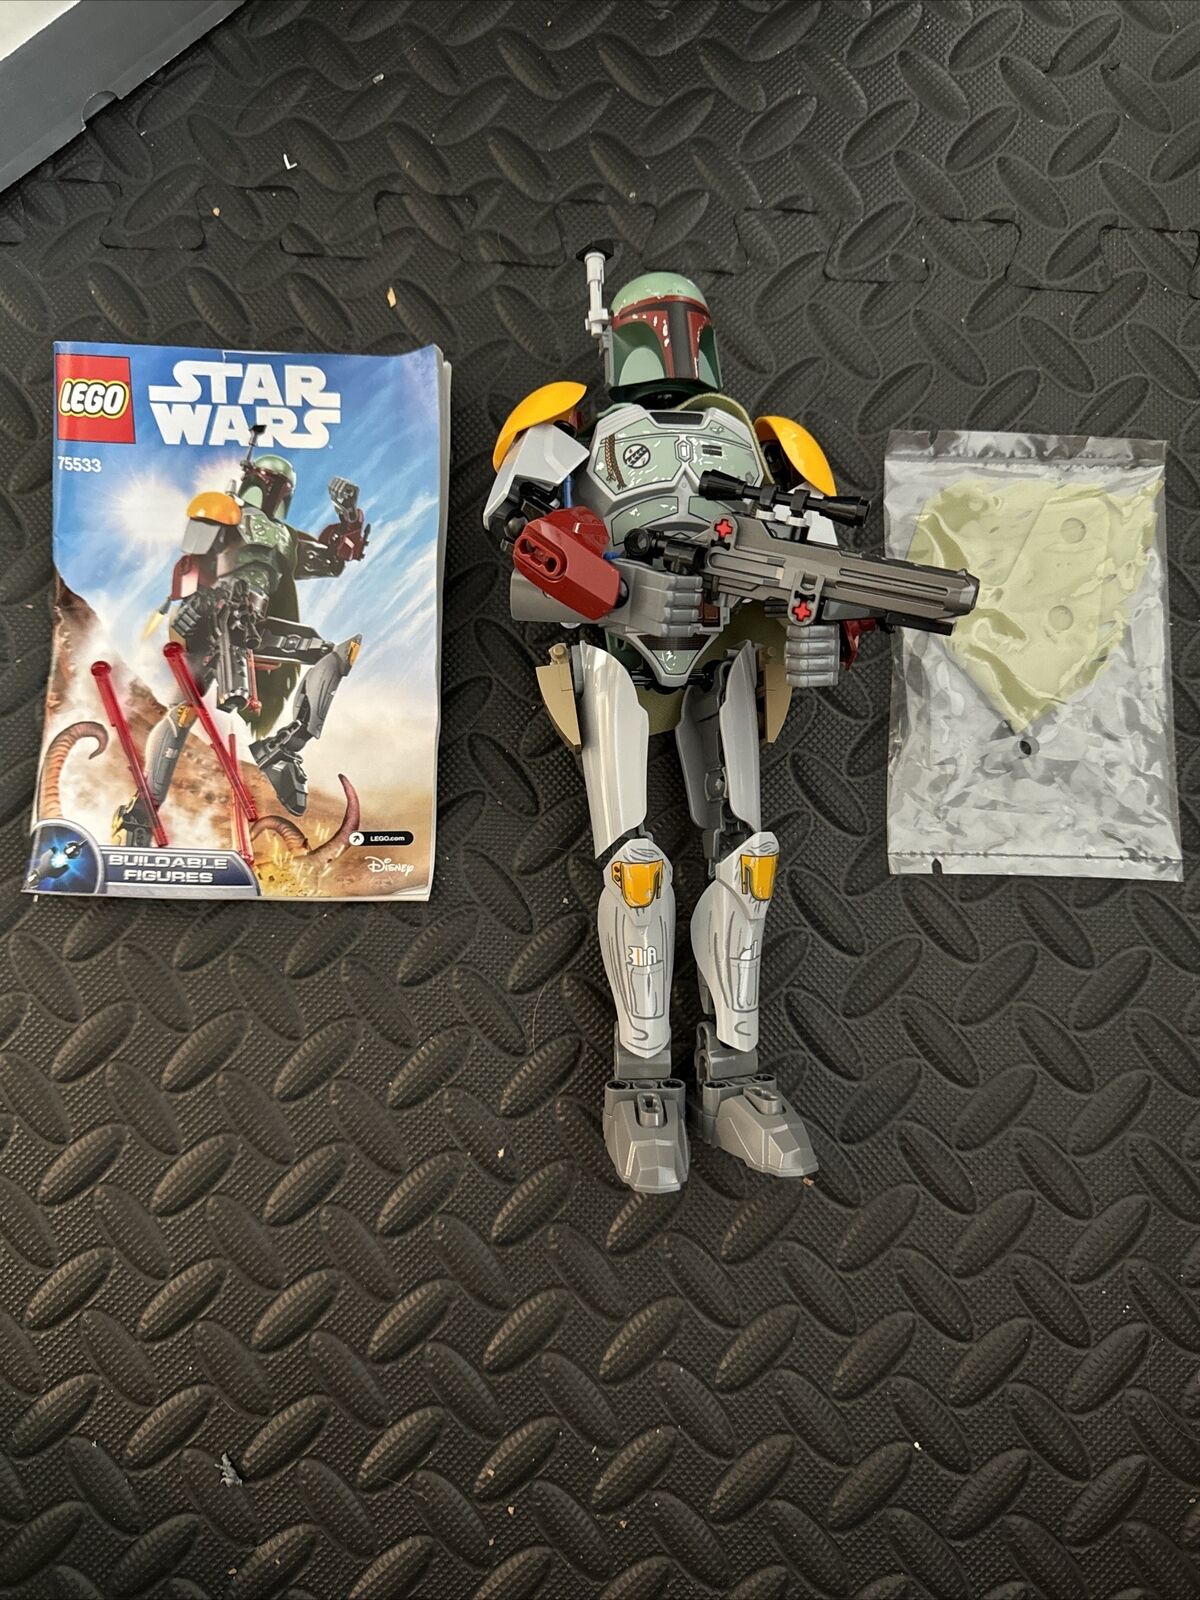 Lego Star Wars 75533 Boba Fett Buildable Figure Complete! (No Box)